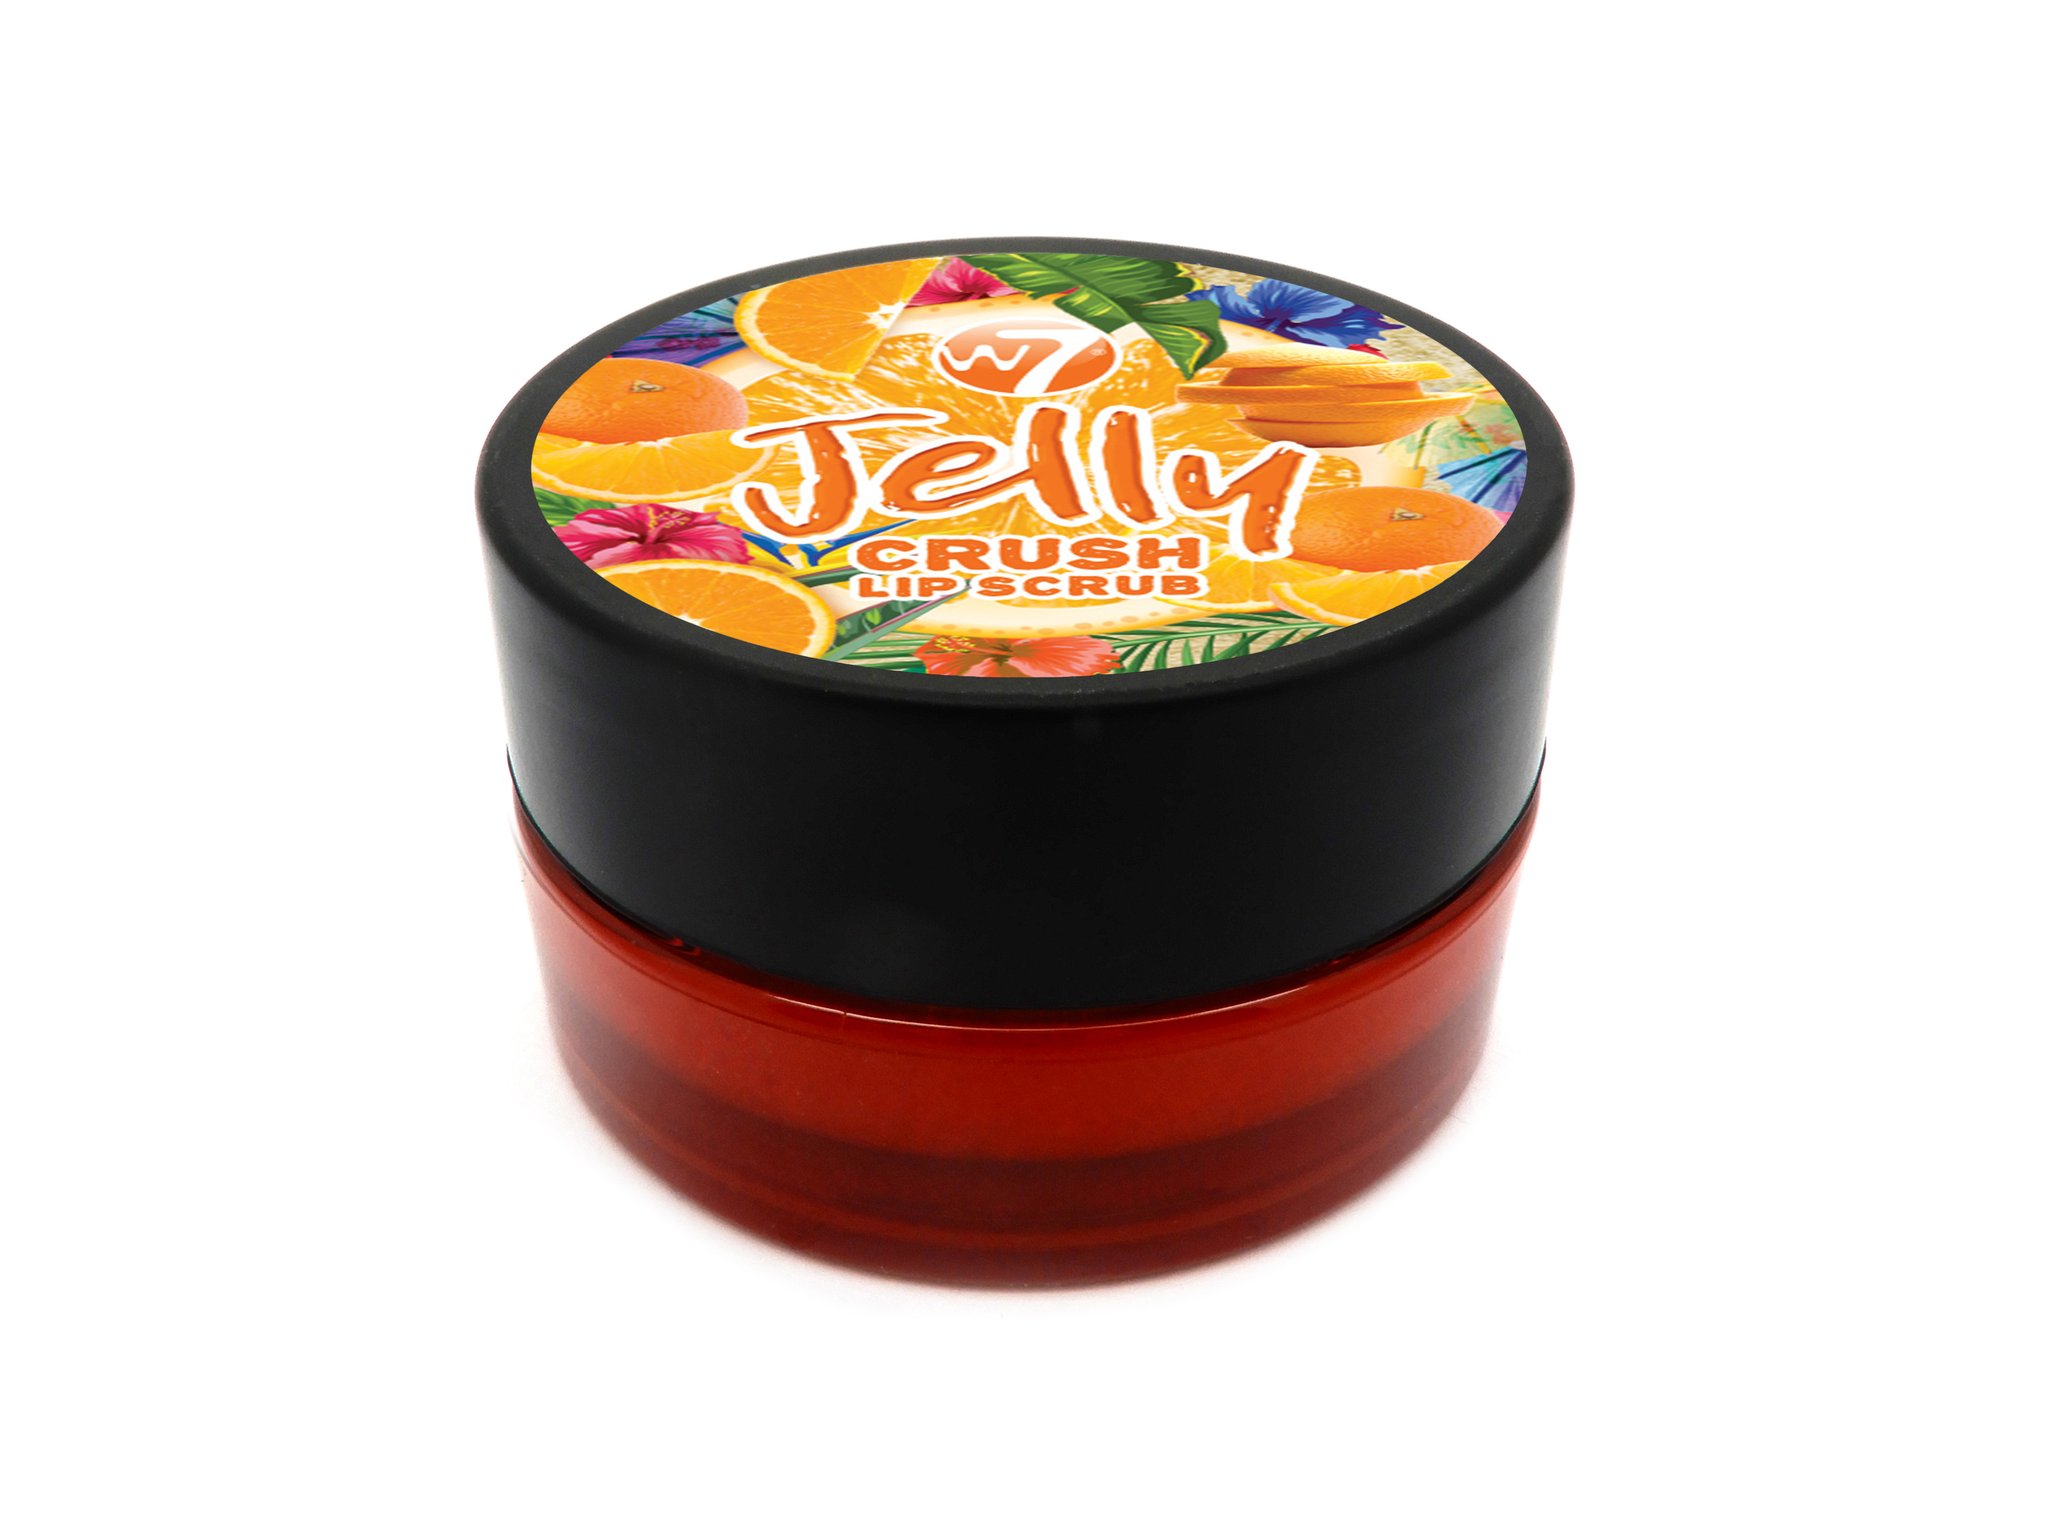 W7 Jelly crush lip scrub Outrageous Orange